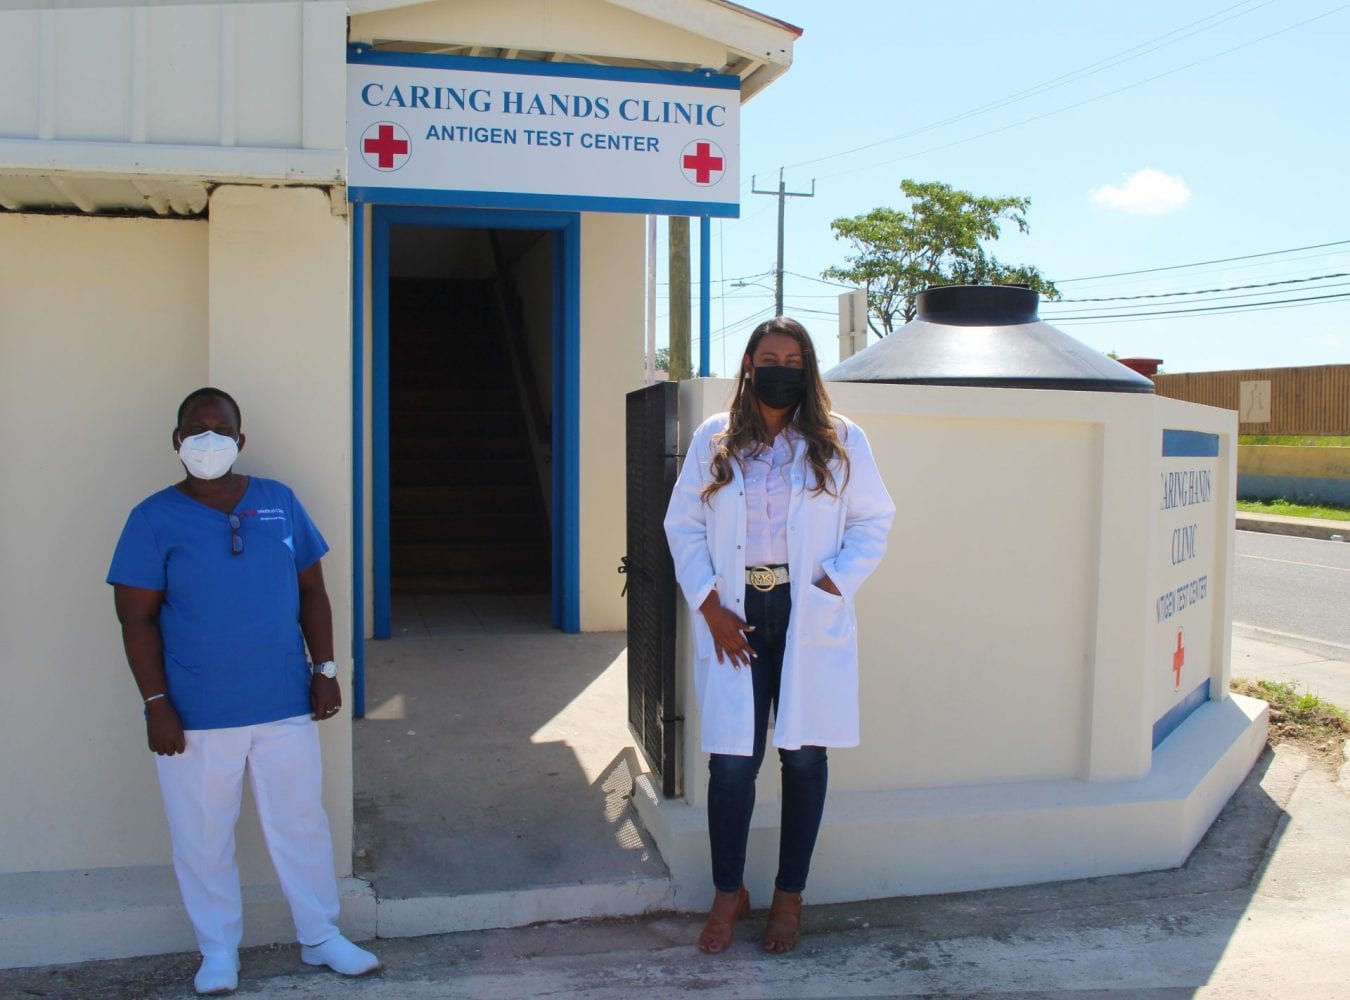 caring hands clinic Belize City tza Maya island air covid test staff